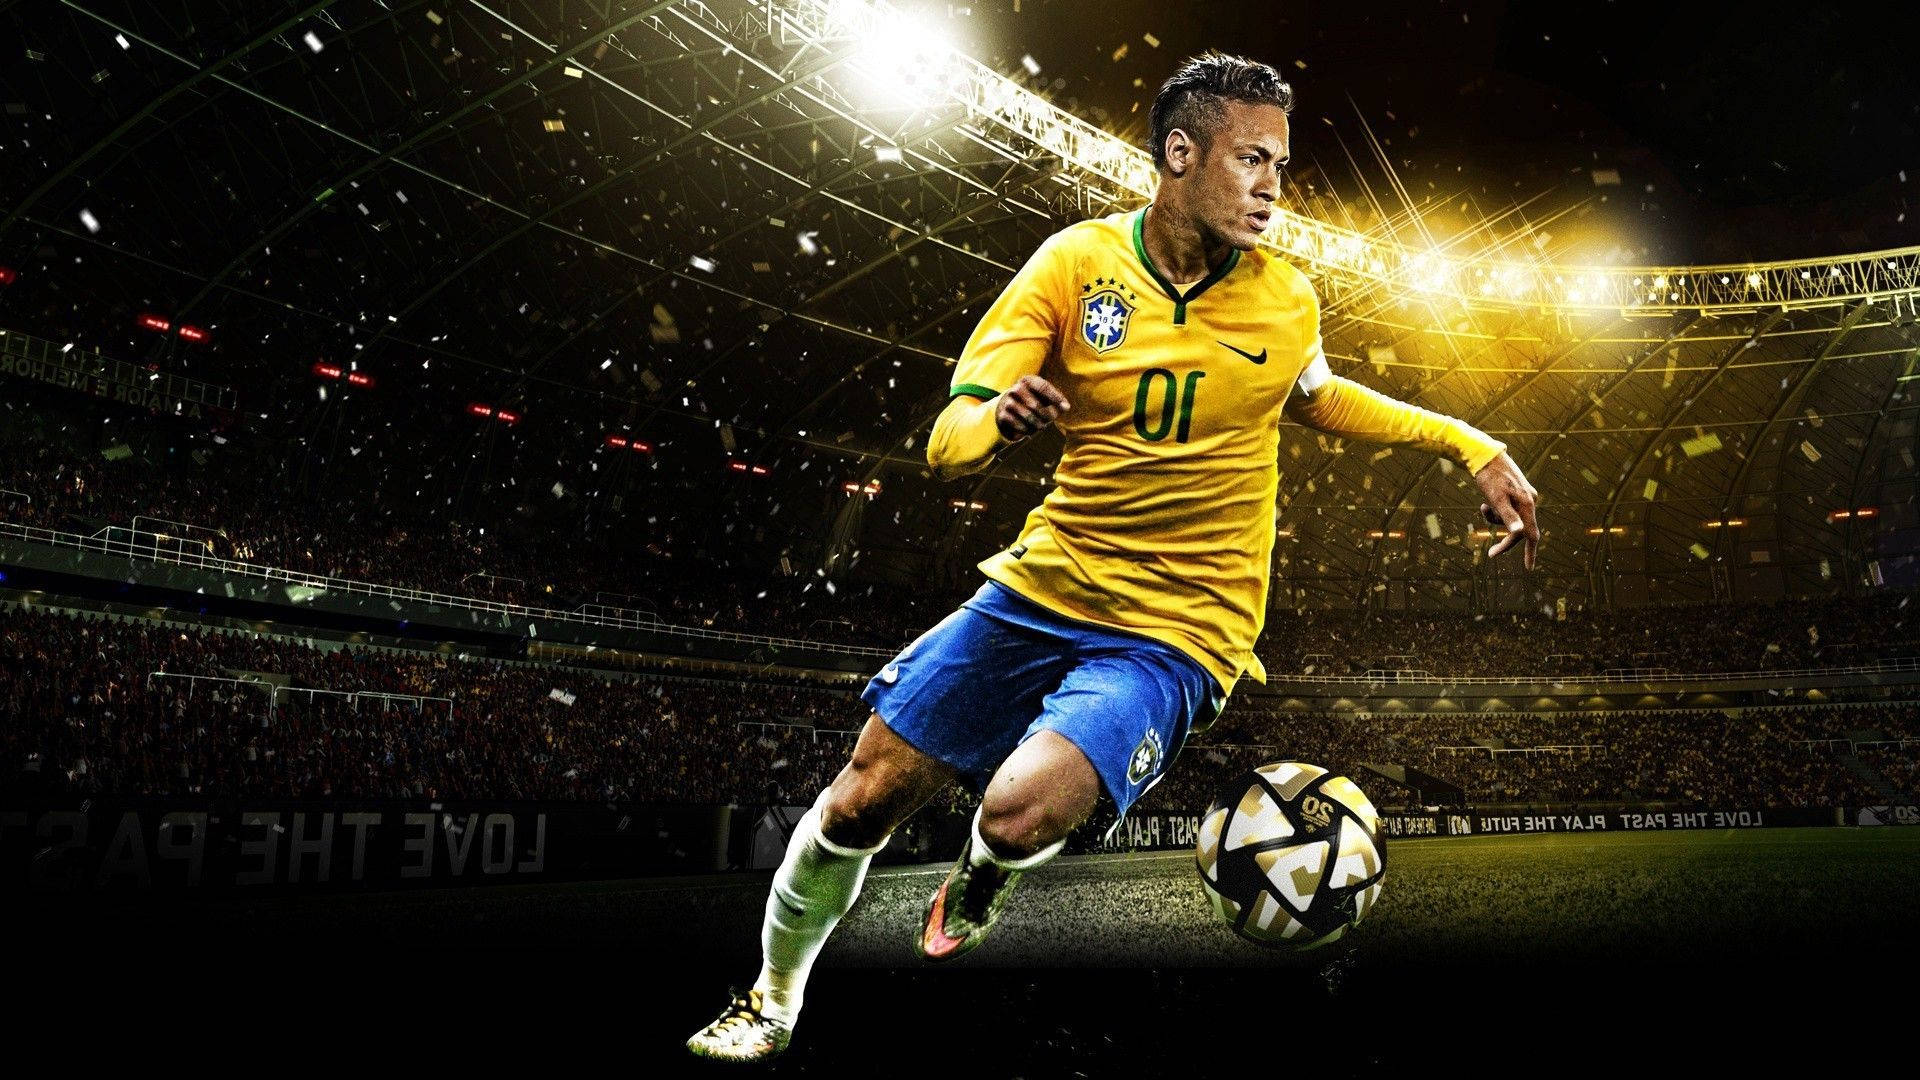 Brazil & Paris Saint-Germain star Neymar shows off his amazing dribbling moves Wallpaper